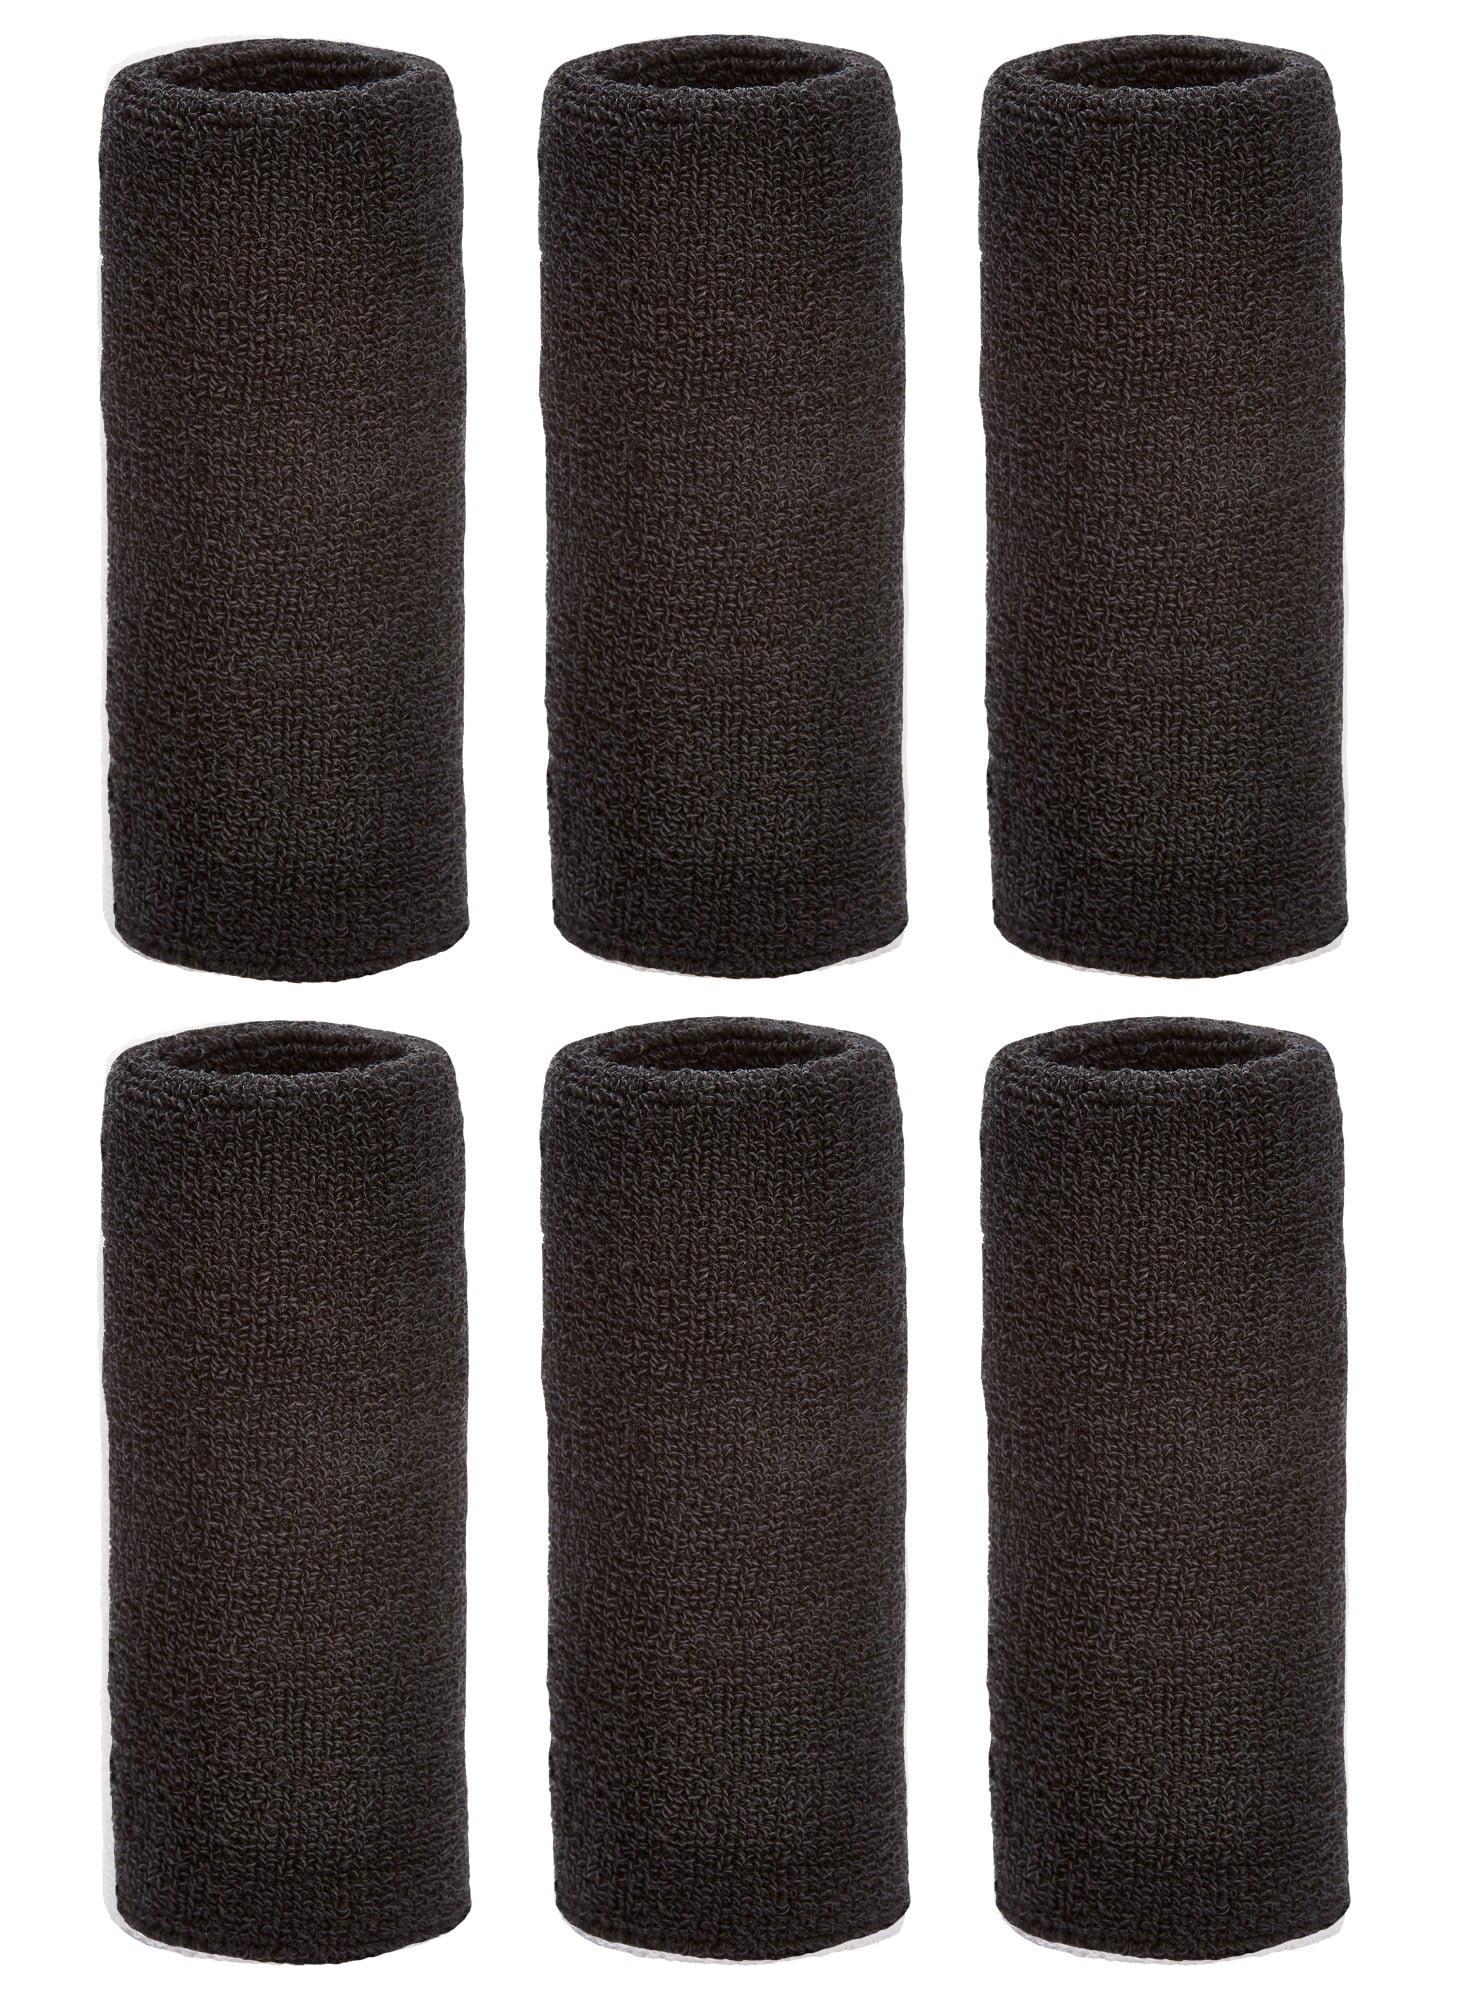 Unique Sports Wrist Towel 6 pack - 6 inch long wristband - Black ...